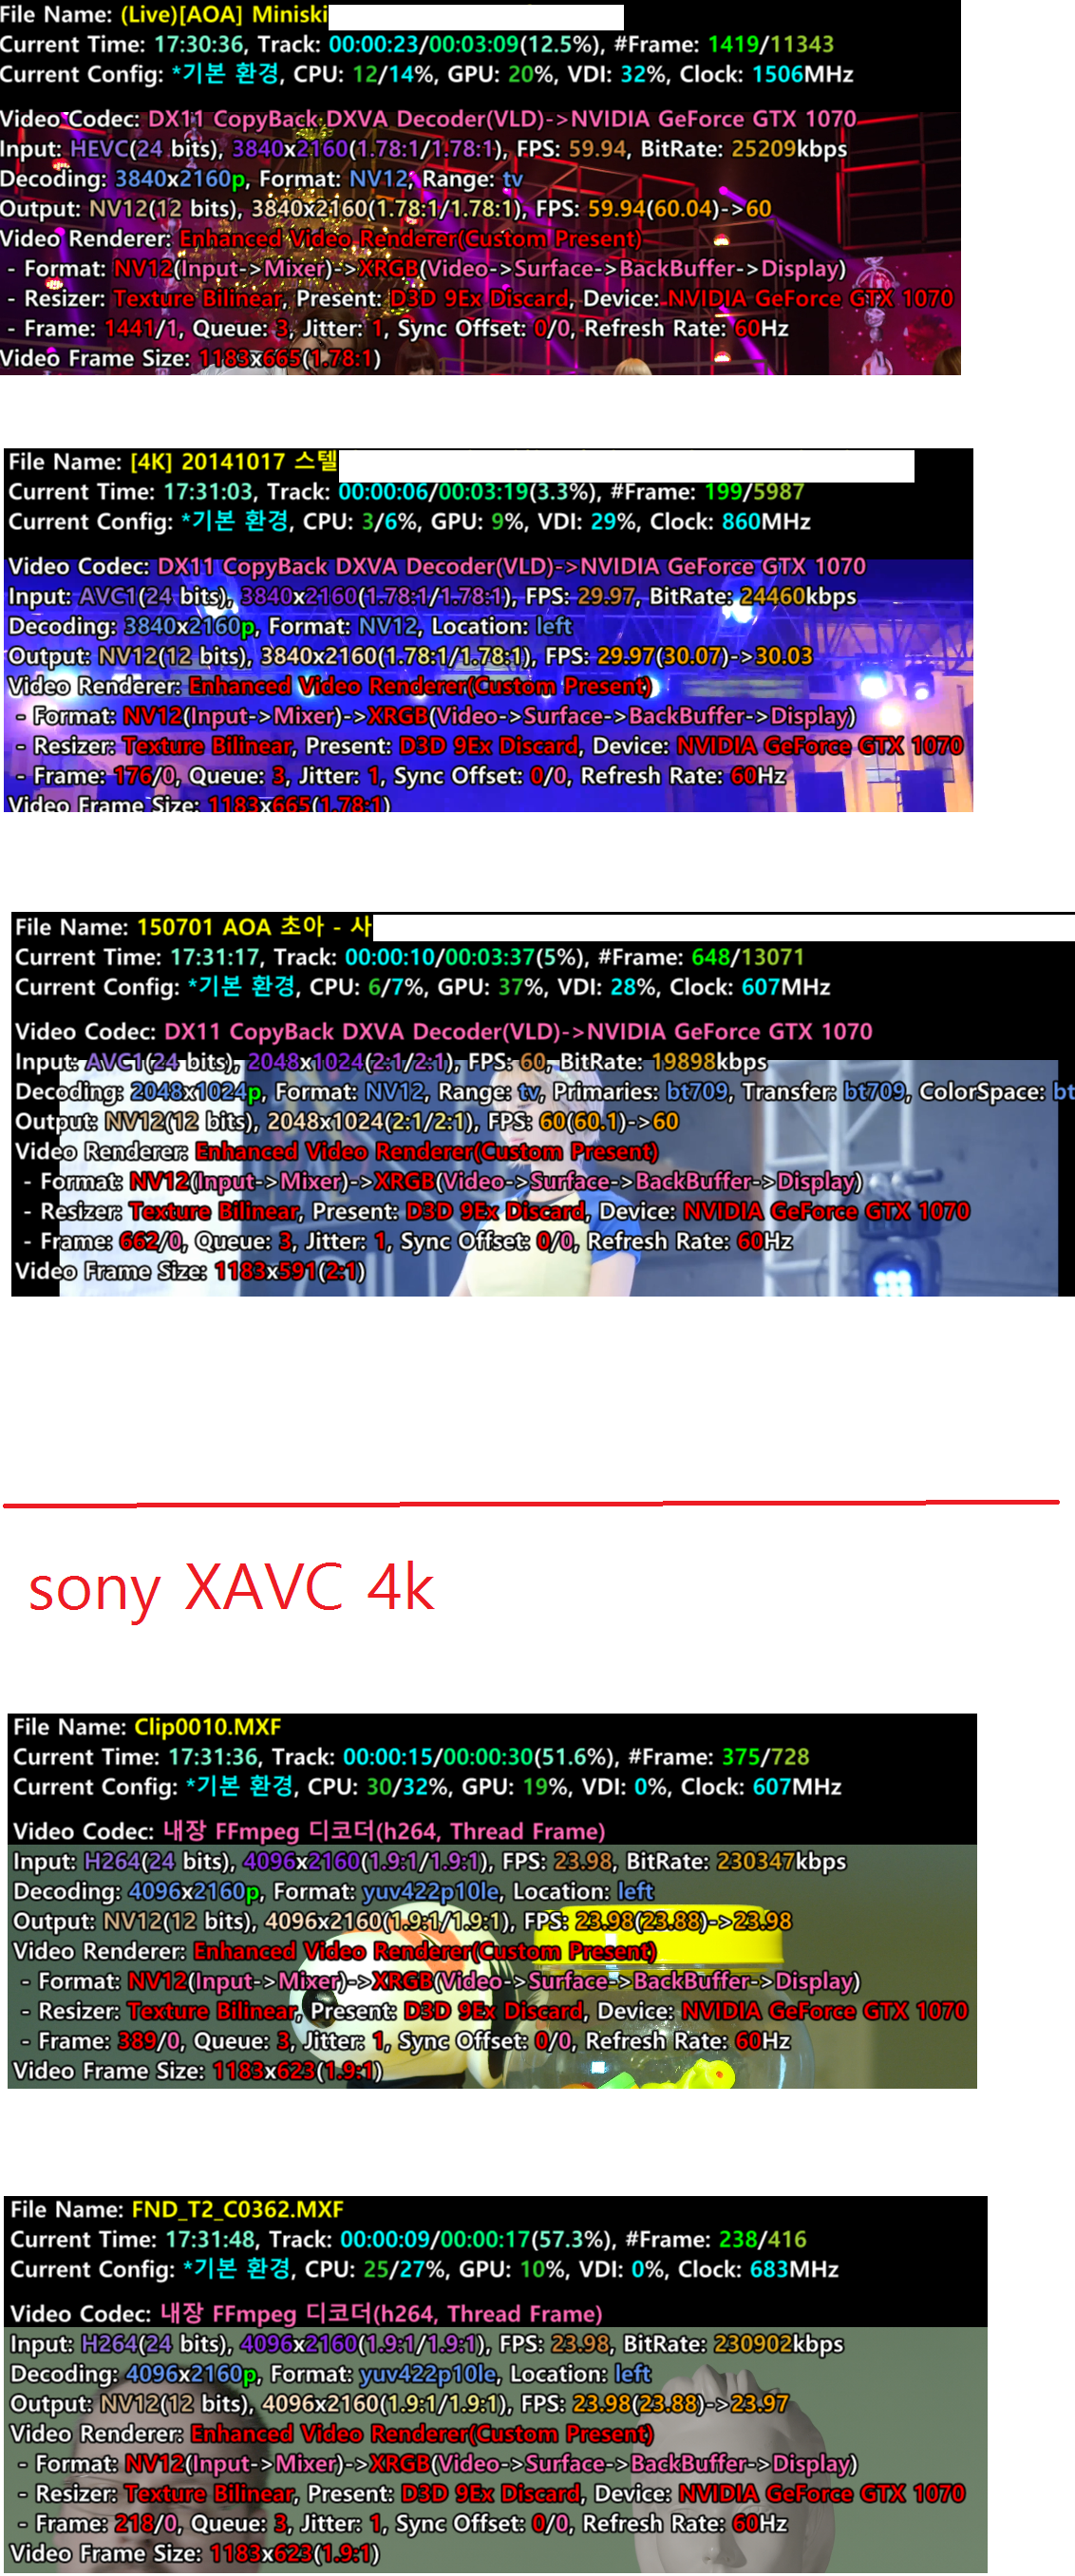 4kCodecSonyXAVC.png